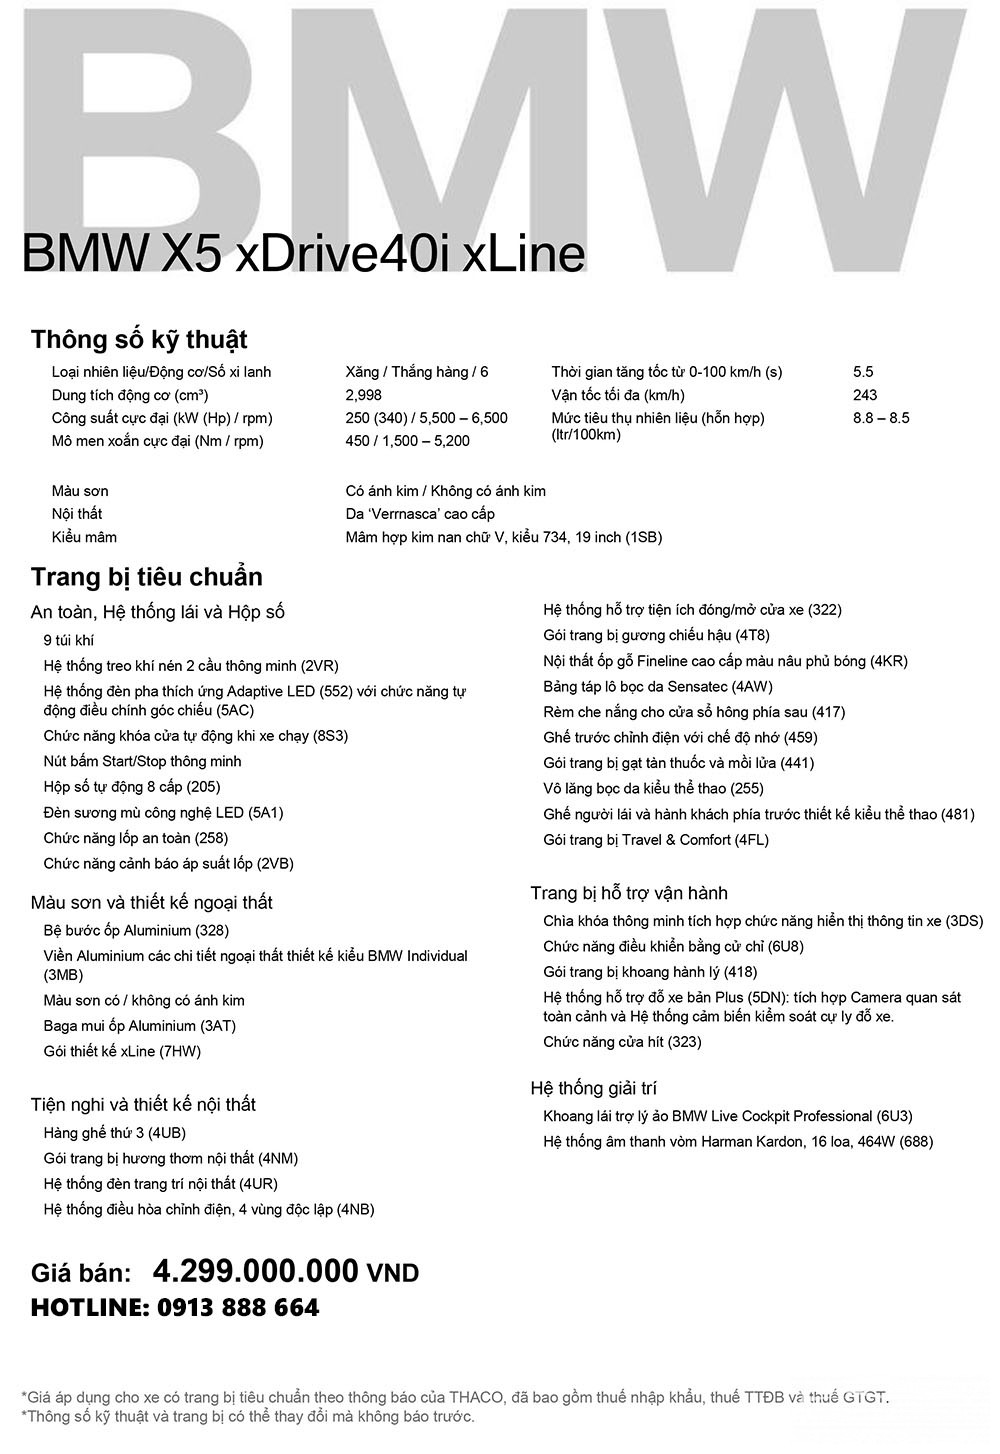 BMW X5 xDrive40i xLine - giaxenhap - resize